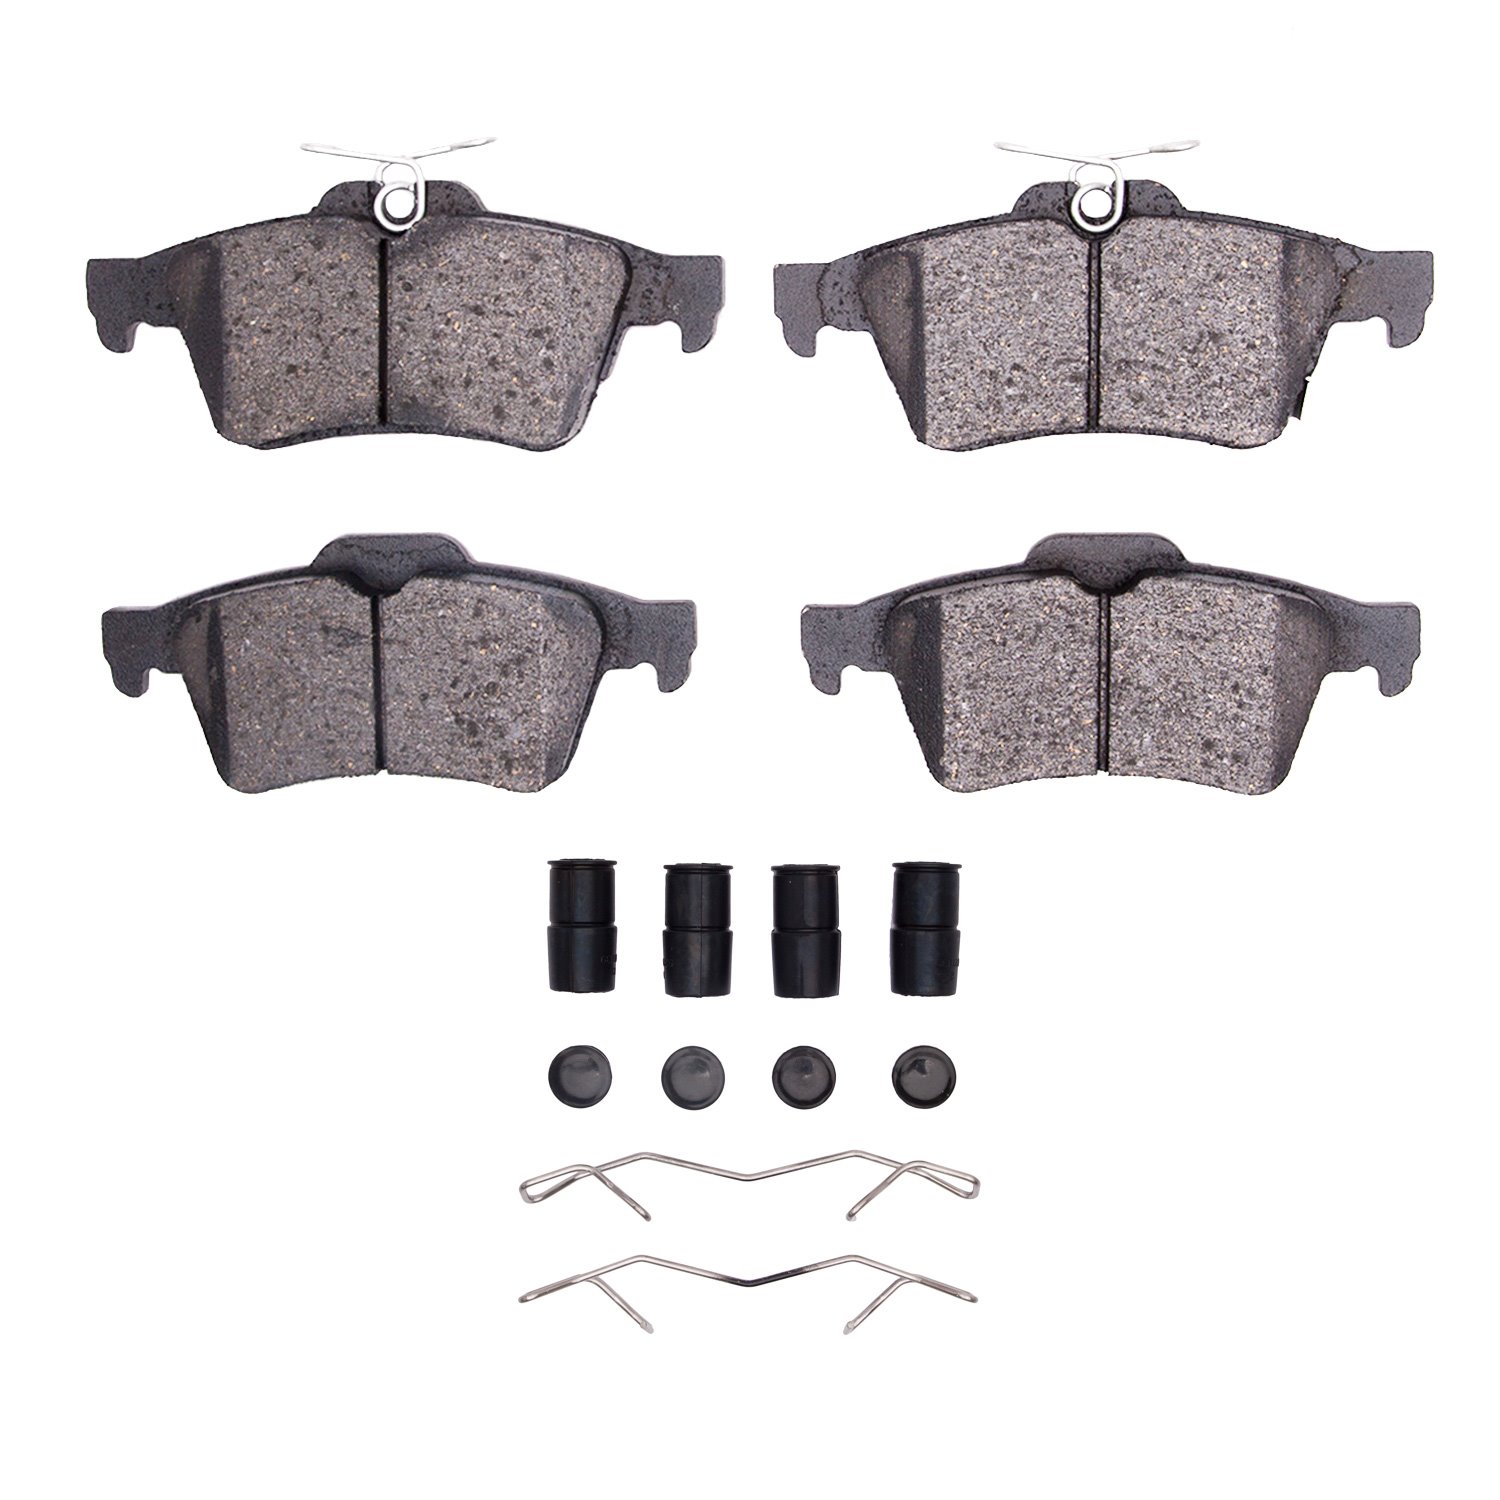 1551-1564-11 5000 Advanced Ceramic Brake Pads & Hardware Kit, Fits Select Ford/Lincoln/Mercury/Mazda, Position: Rear